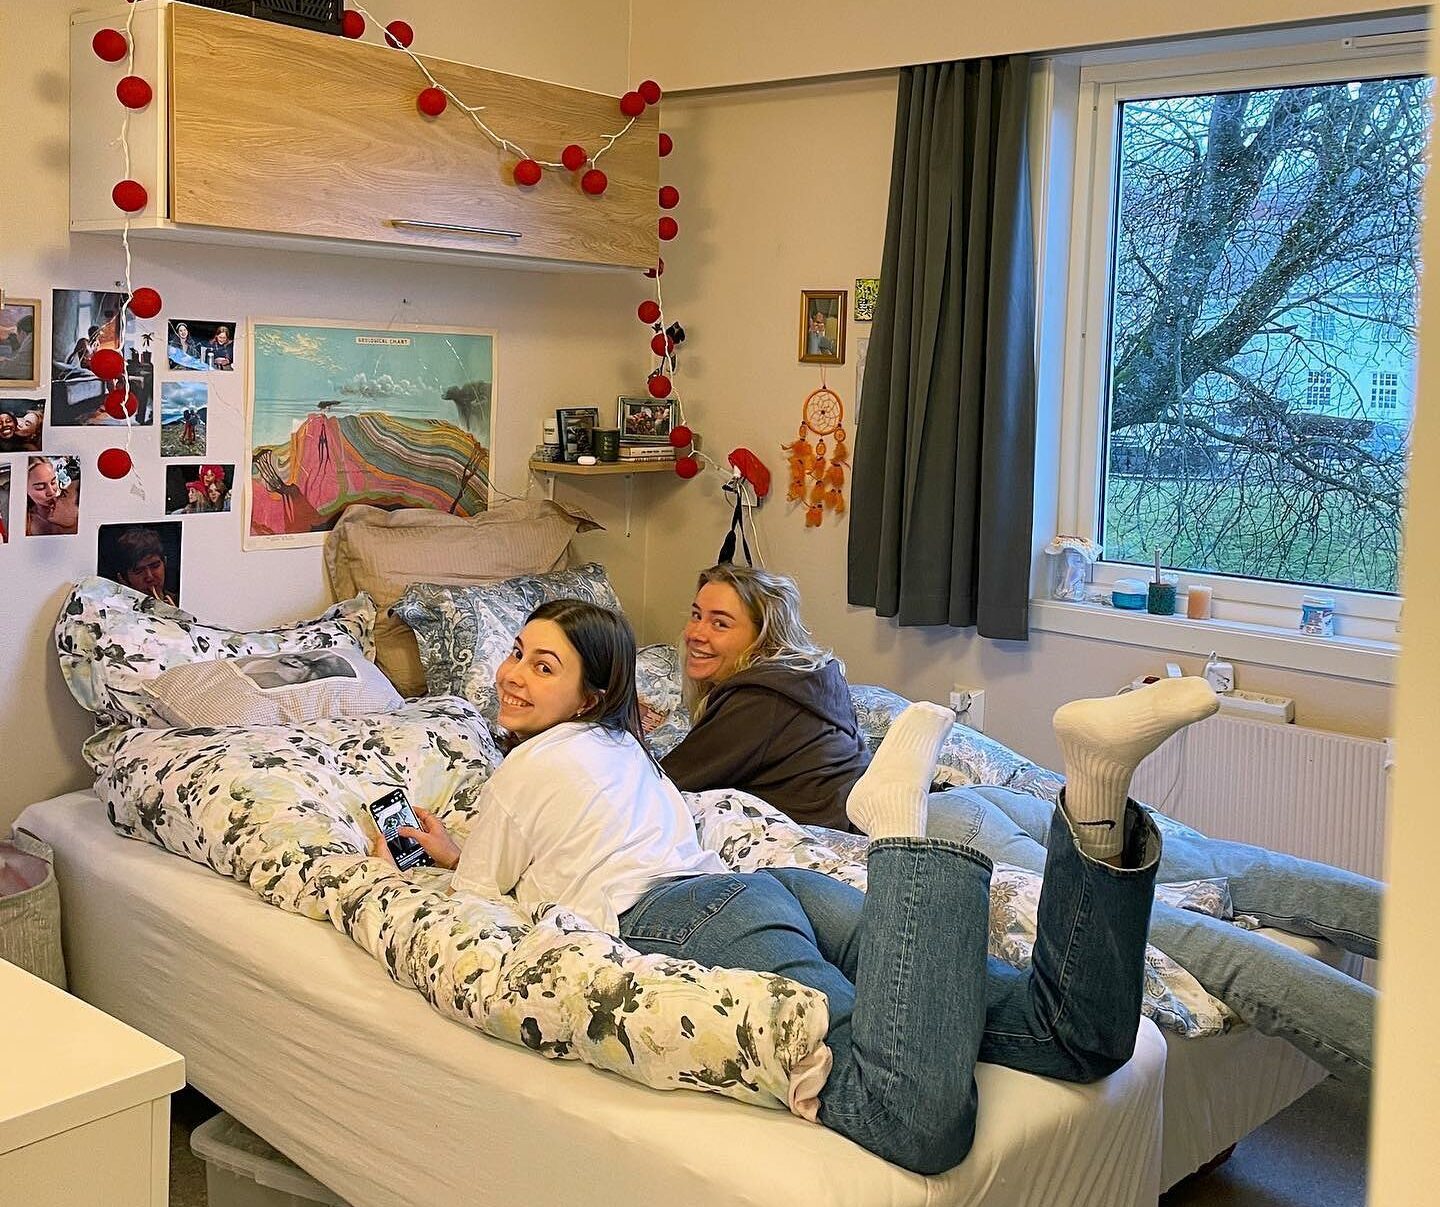 Bilde av internatrom på Sund folkehøgskole med elever som ligger i seng